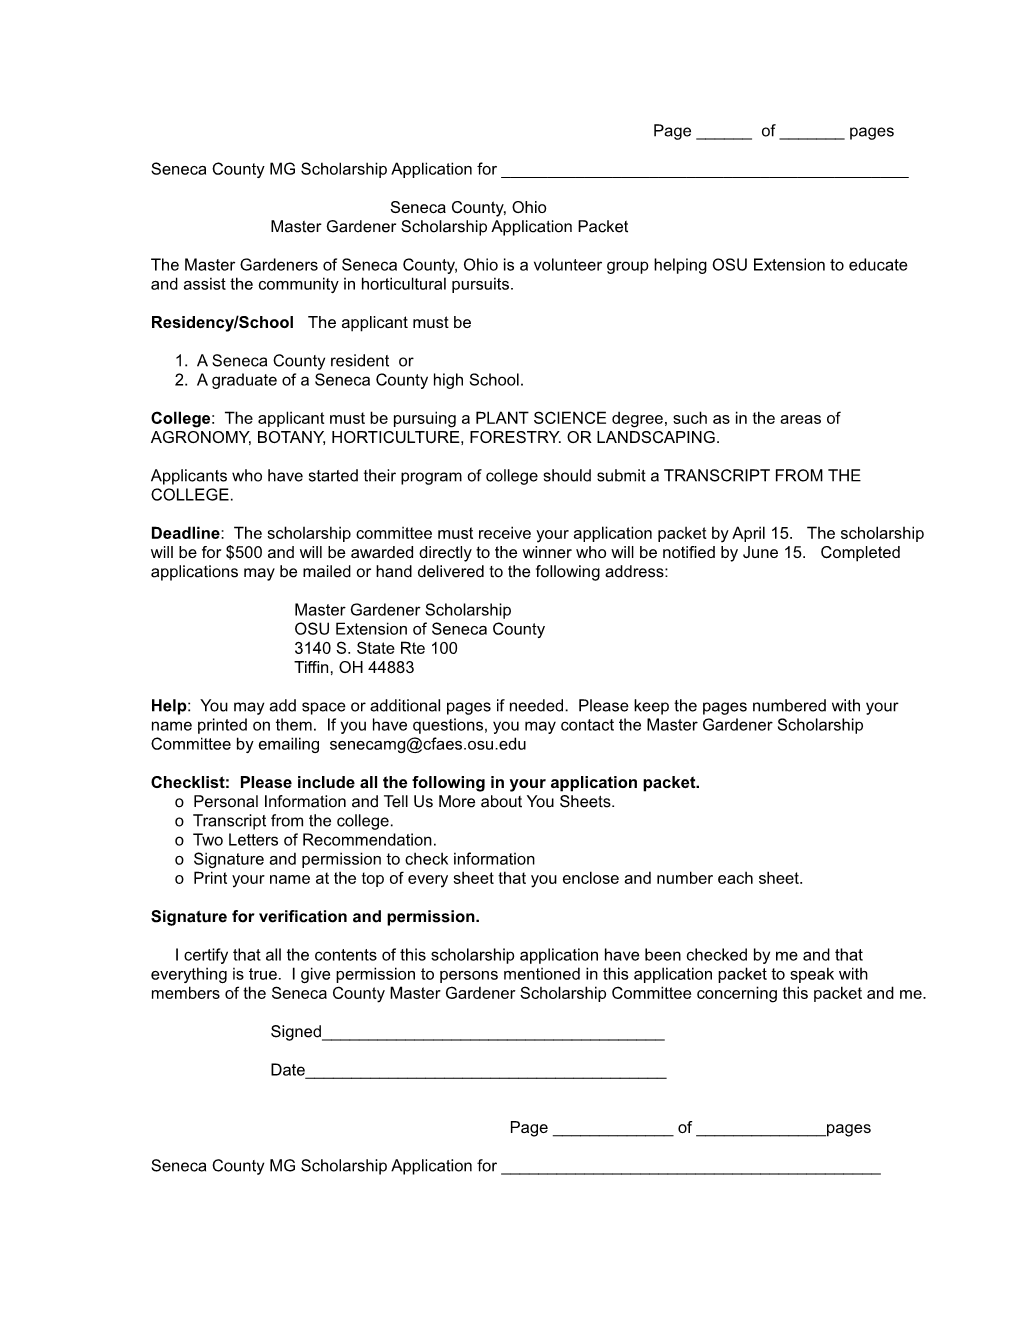 Seneca County MG Scholarship Application for ______